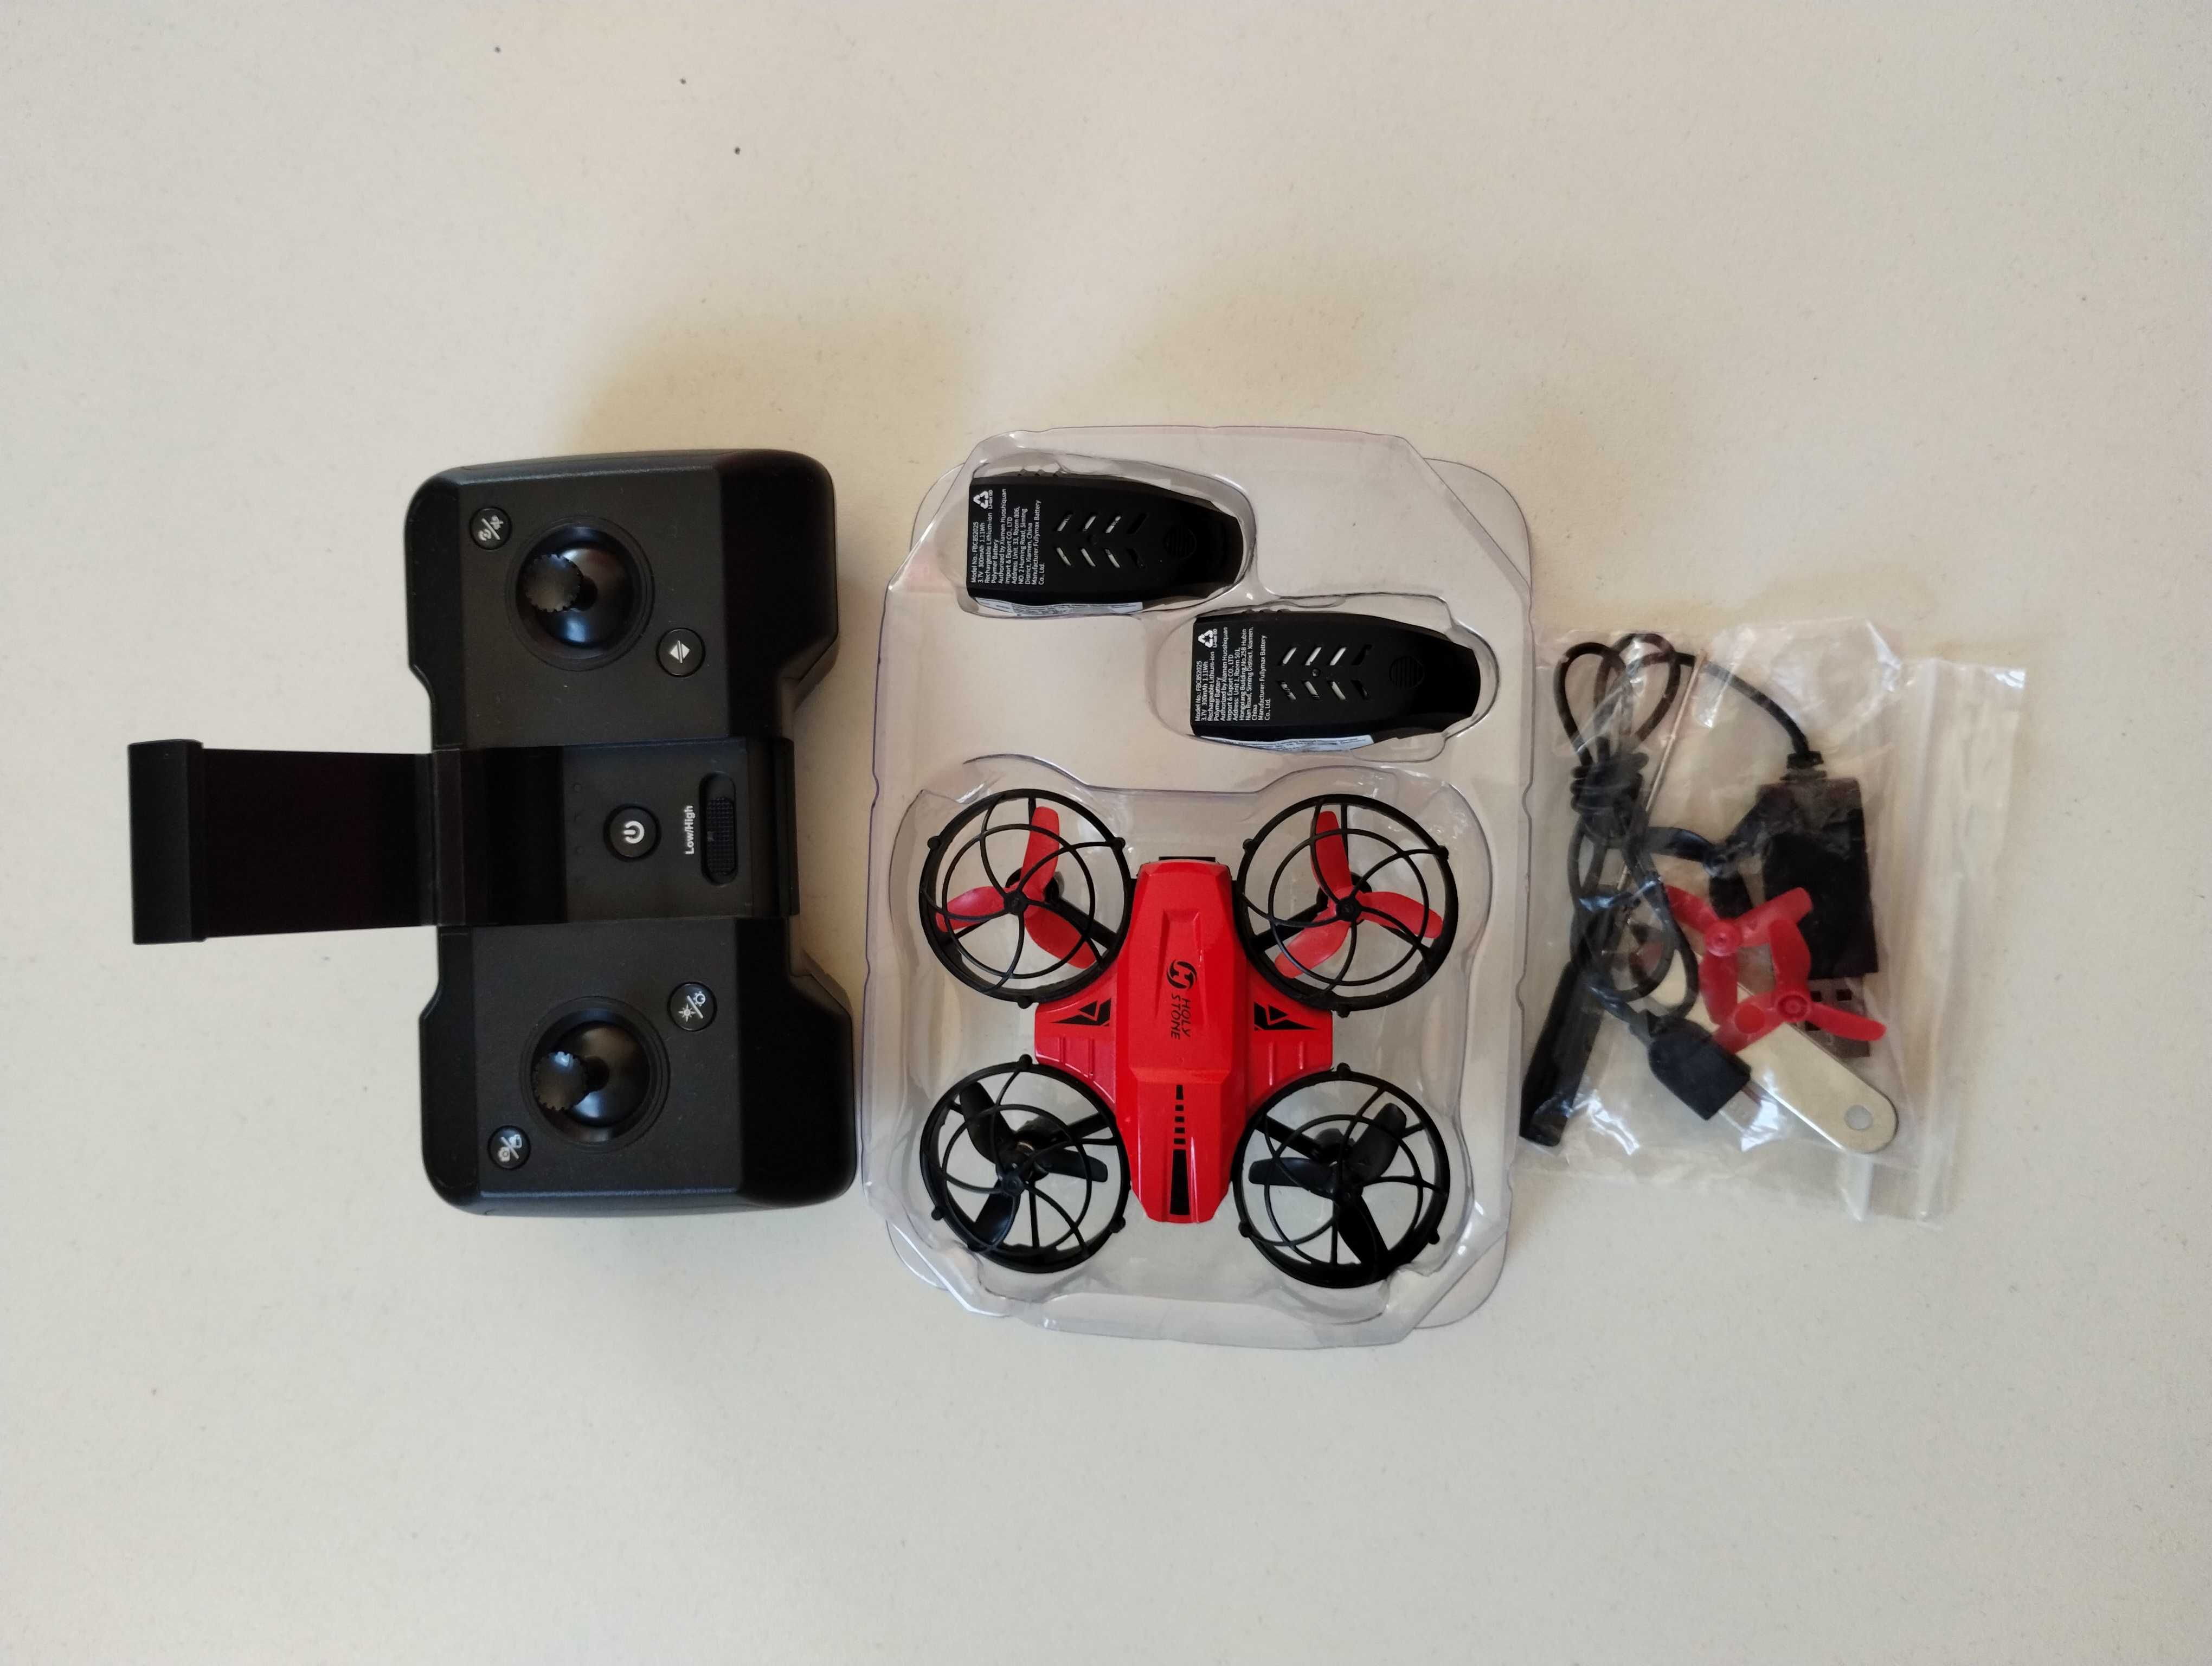 Mini dron zabawka HOLY STONE model HS 420.